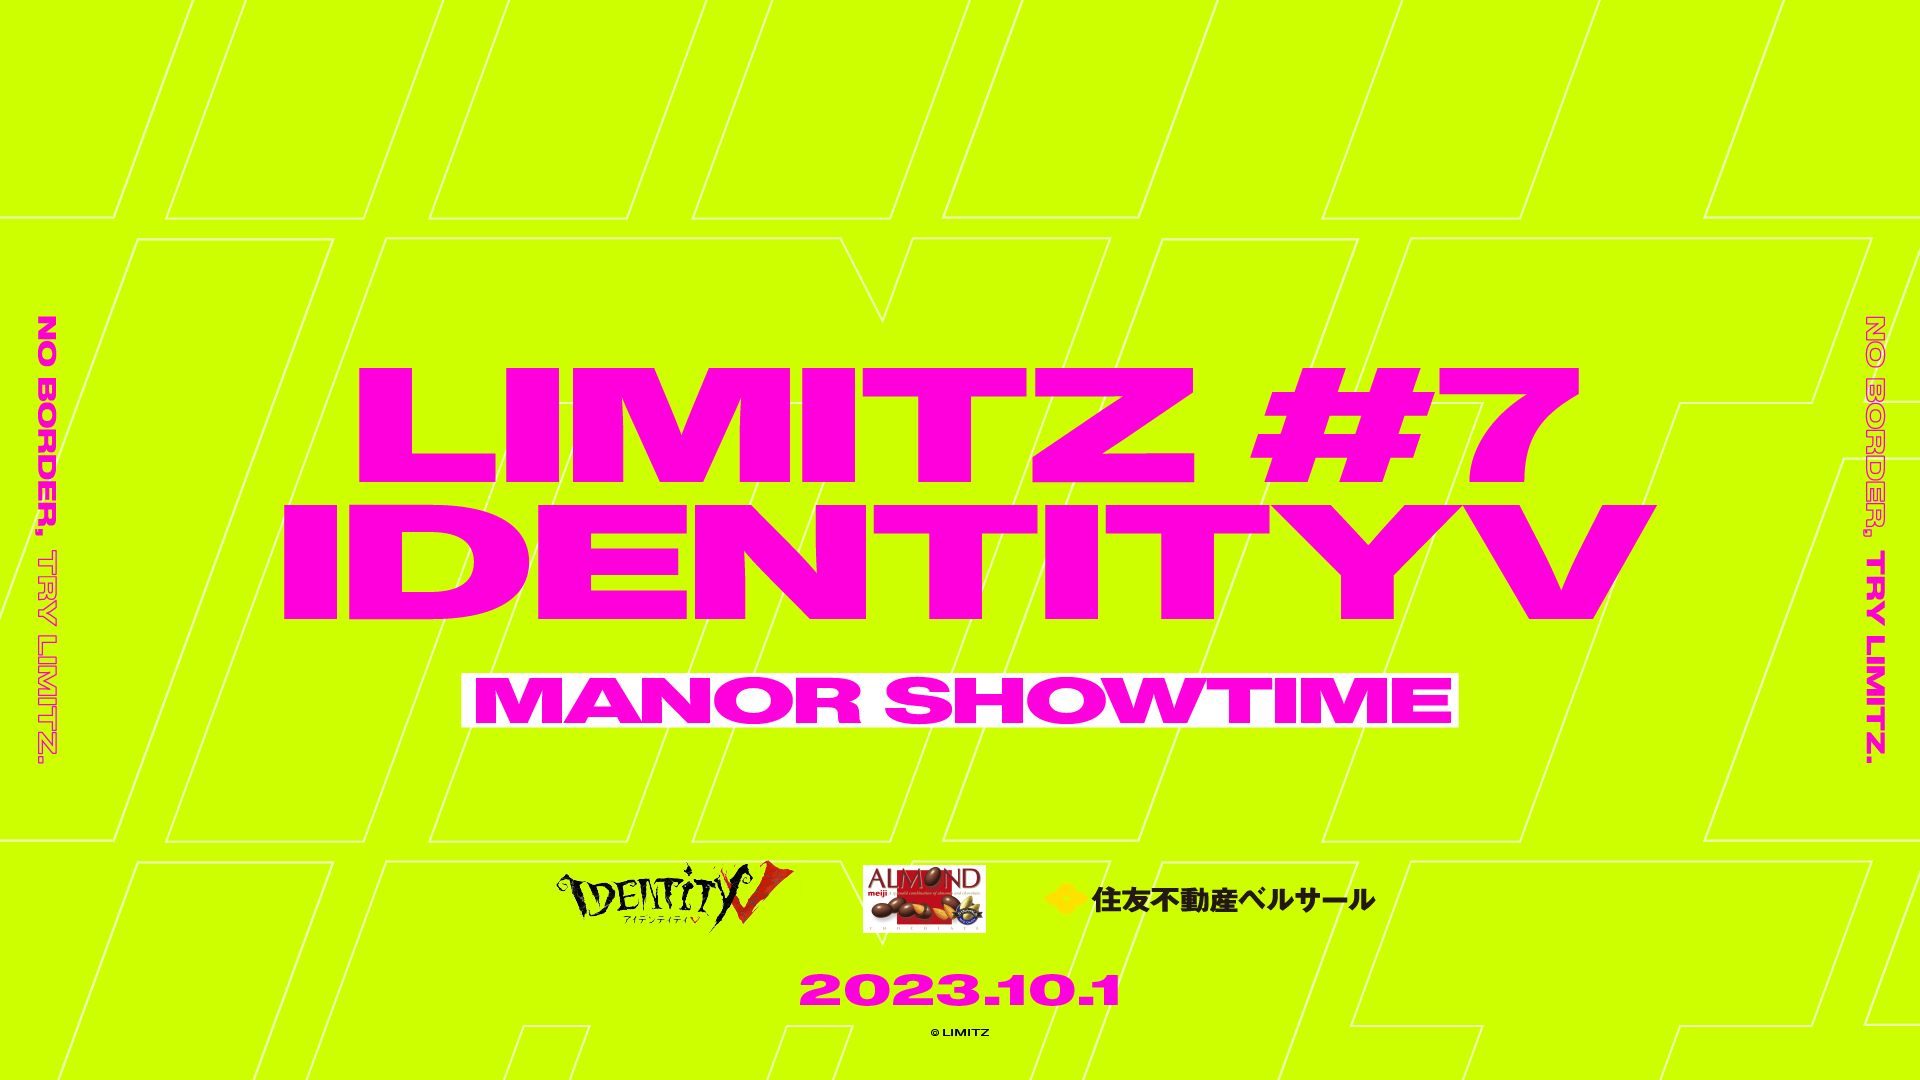 出演情報 – IdentityV 第五人格部門が『LIMITZ #7 IdentityV 第五人格 Manor Showtime』に出演